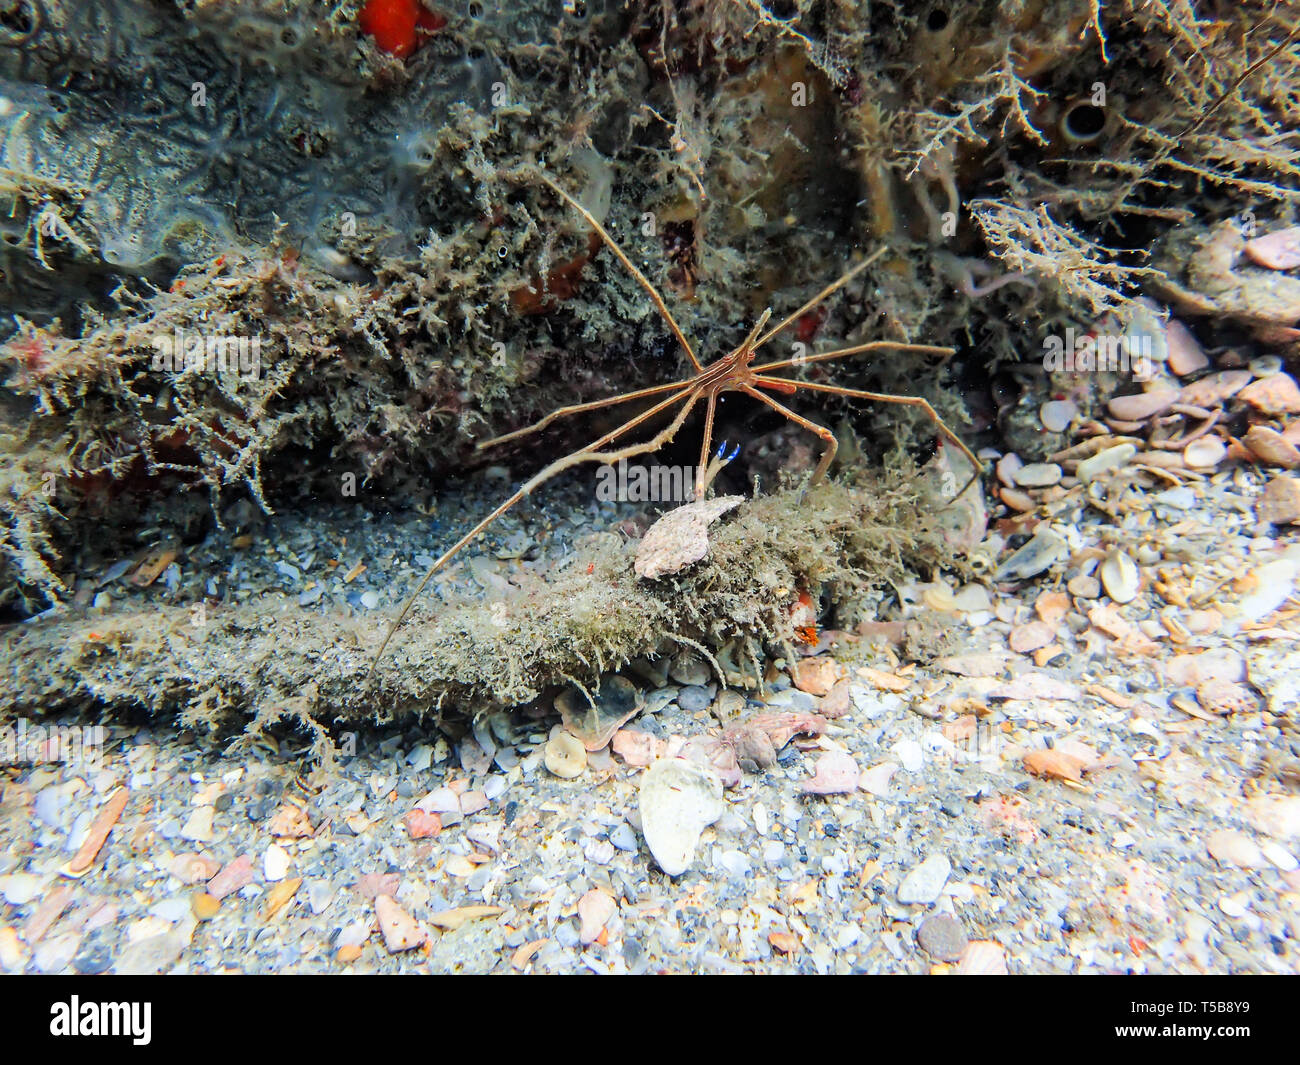 Stenorhynchus seticornis, the yellowline arrow crab, sitting on a rock on the ocean floor. Stock Photo